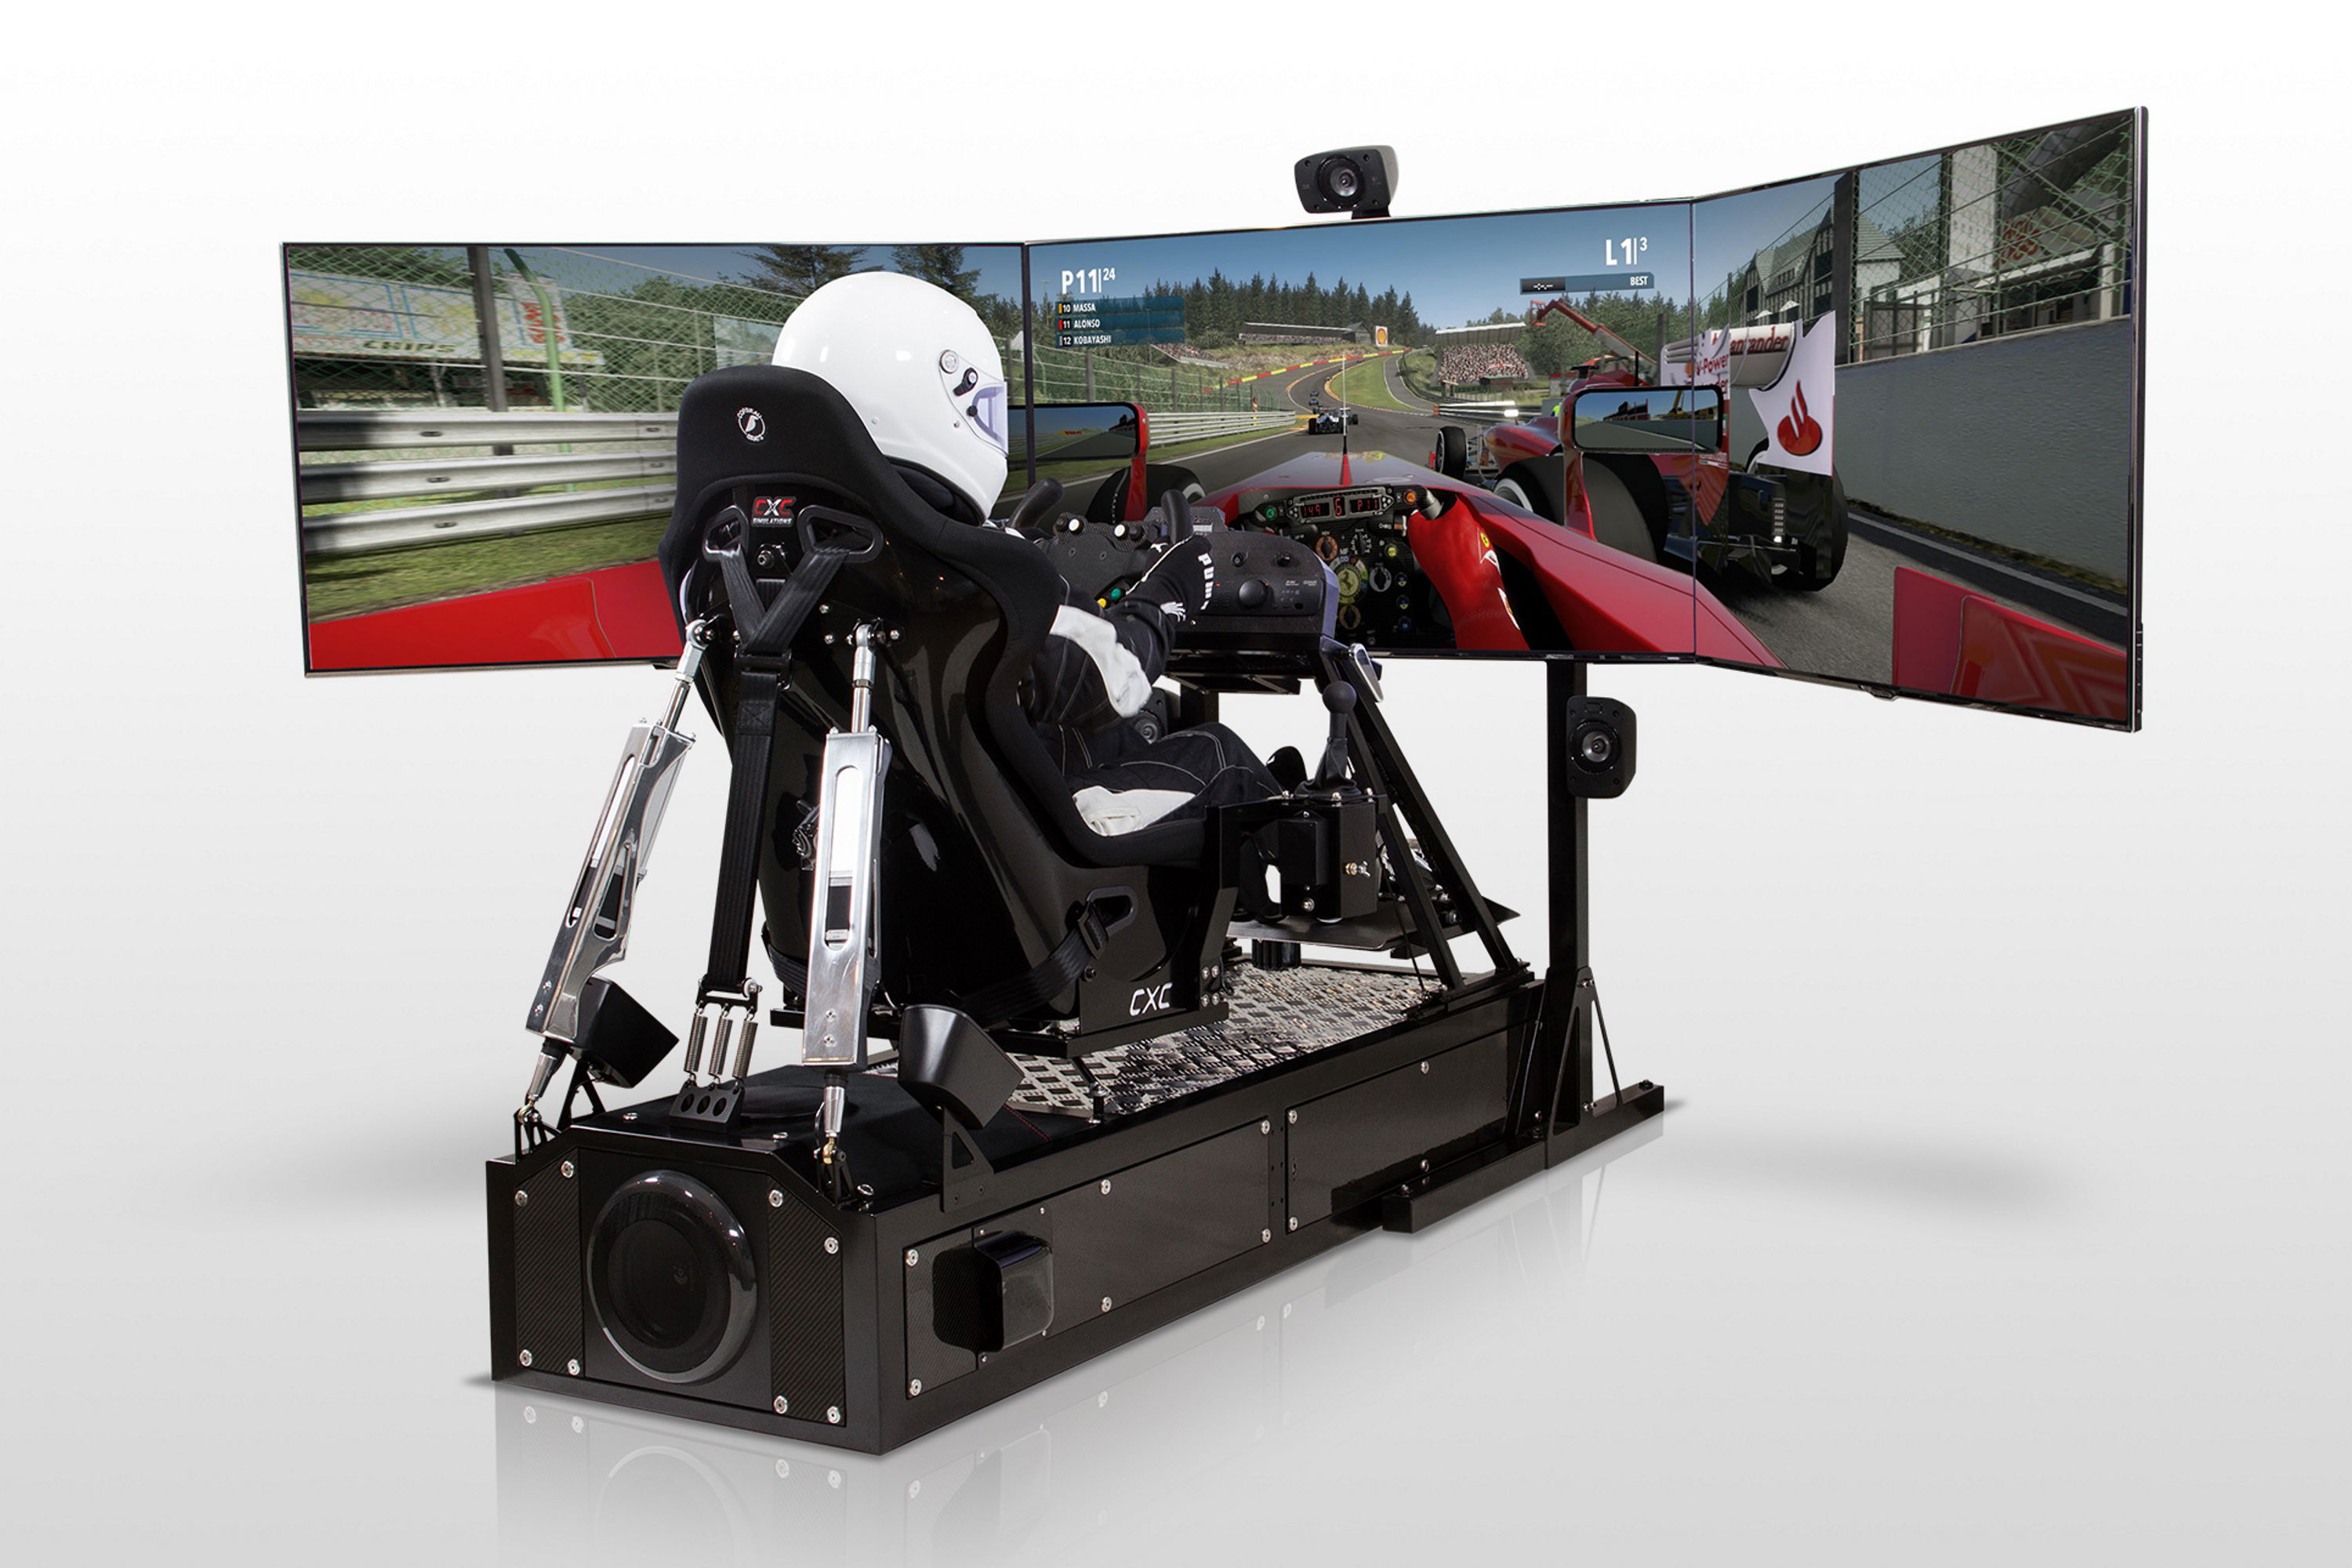 Xbox One/PC/PlayStation Racing Simulator Cockpit Bundle